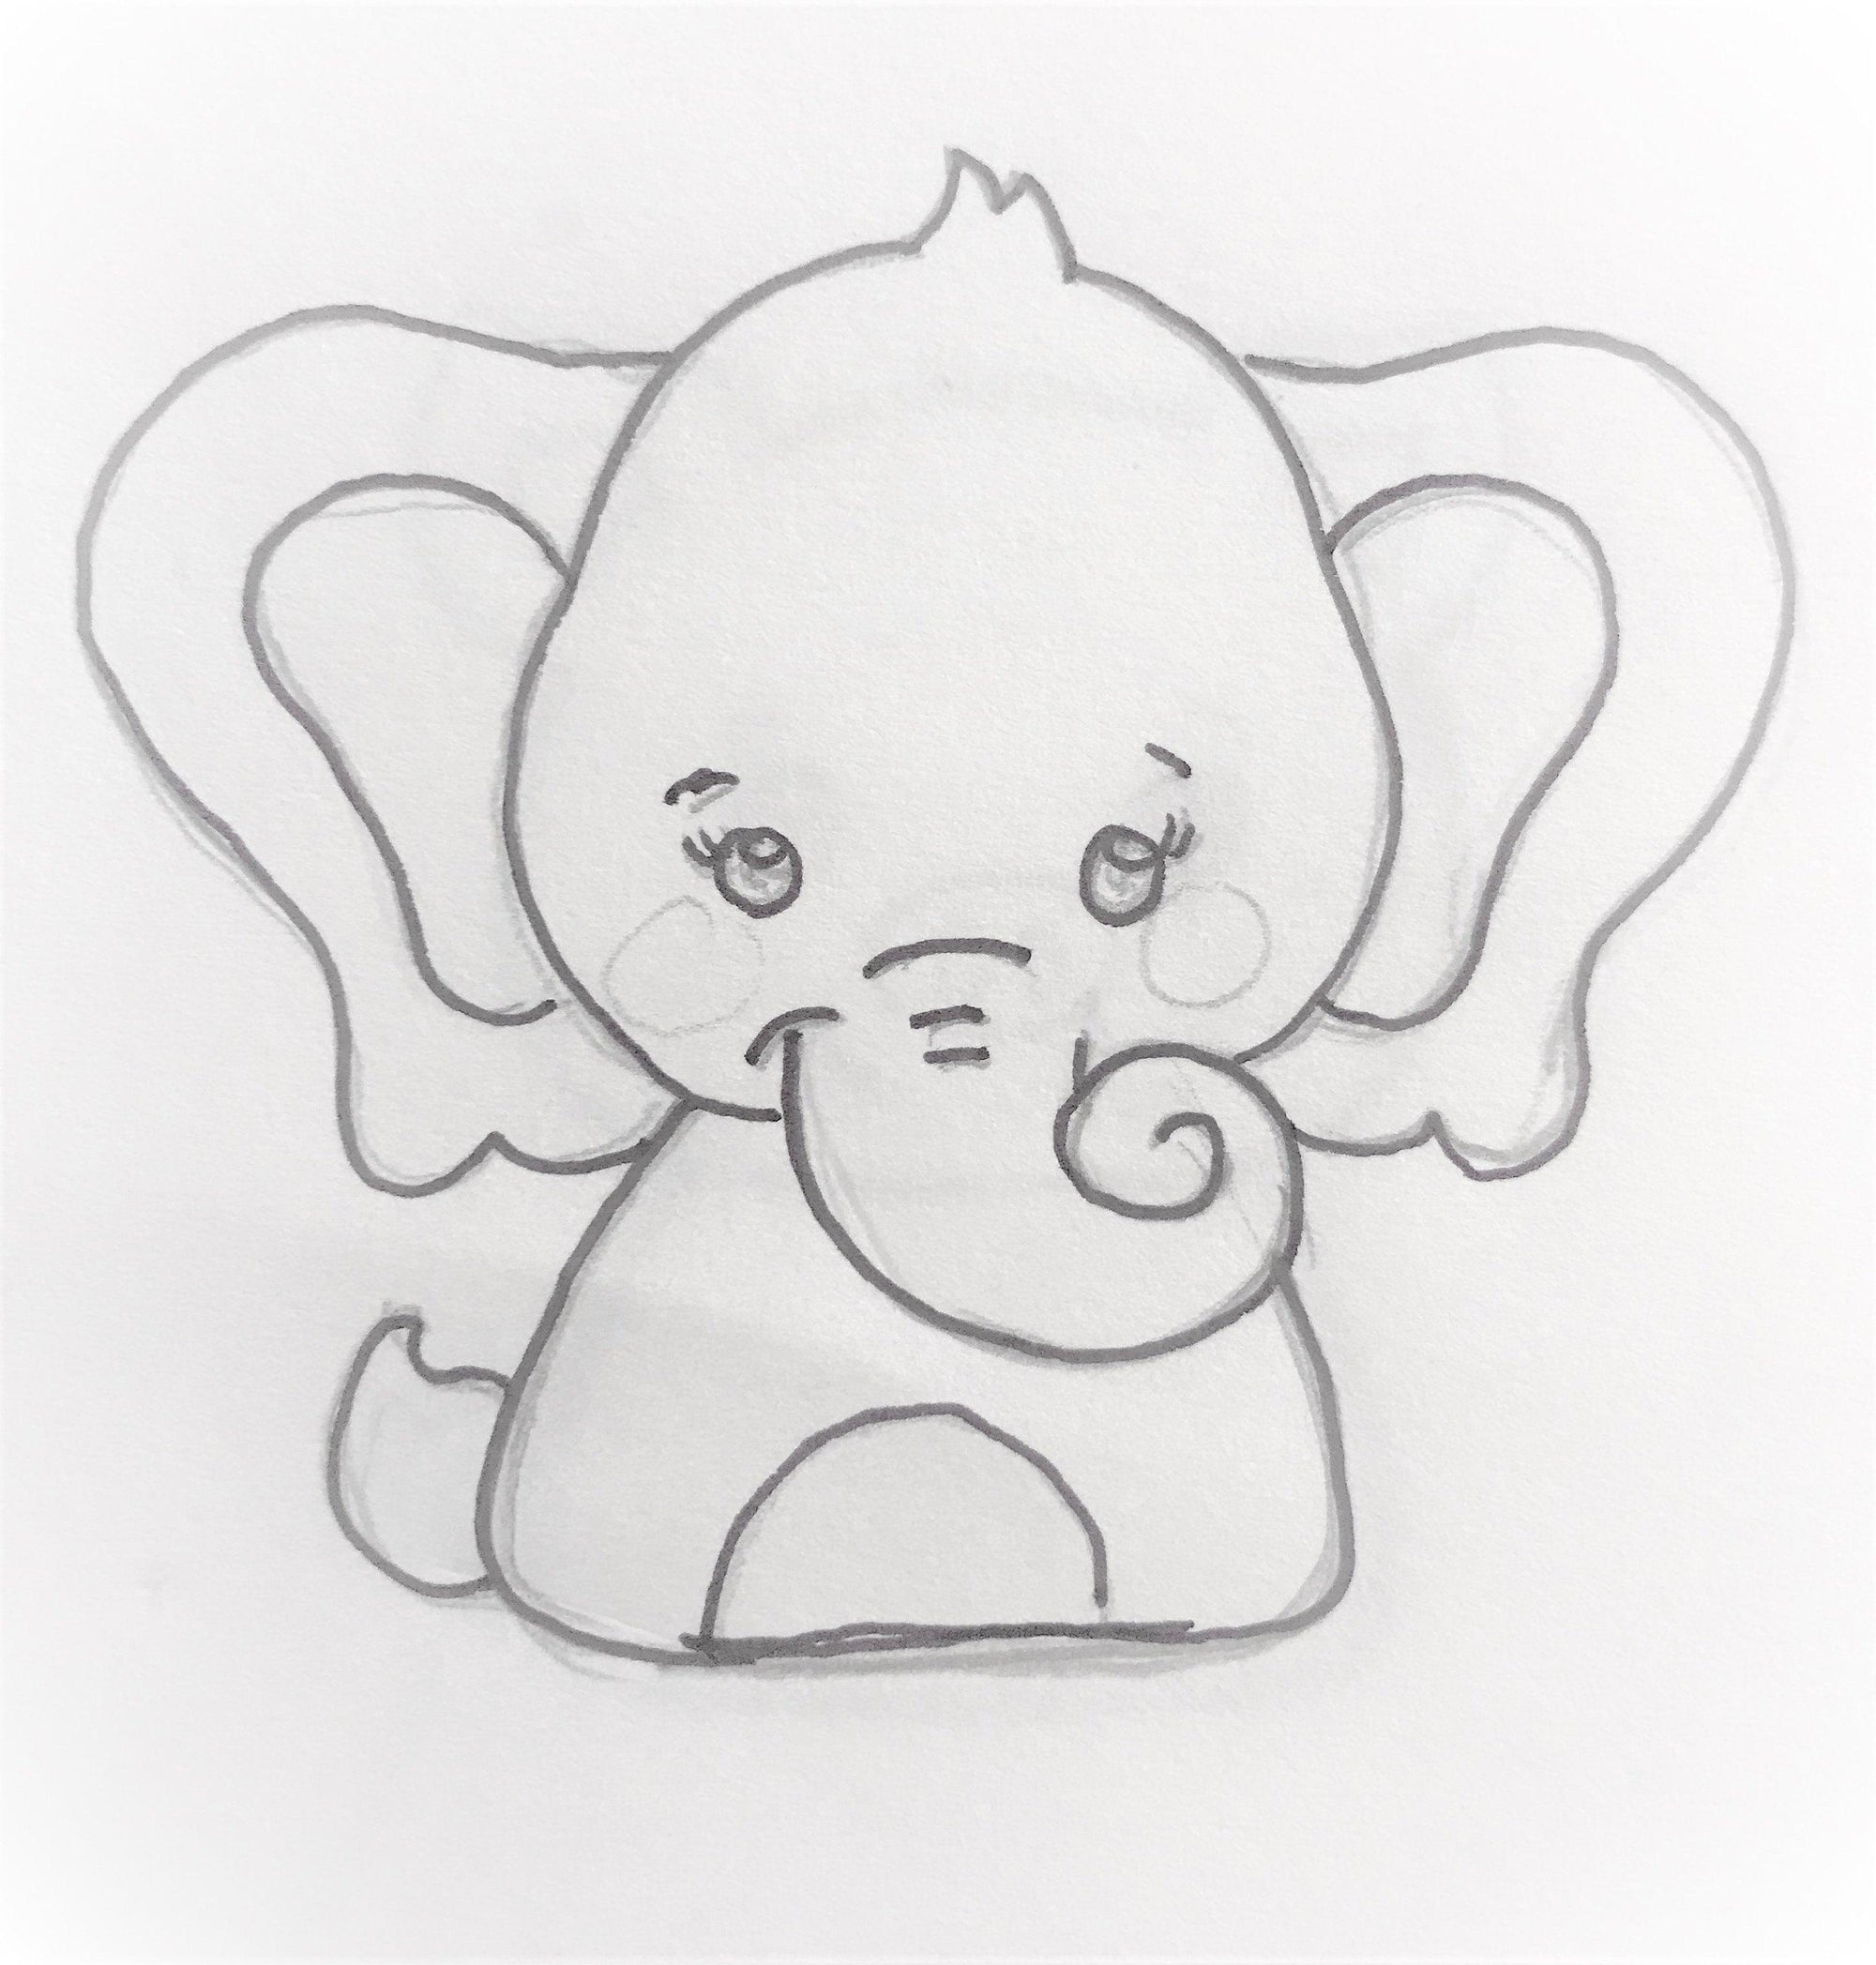 Elephant Cookie Cutter - Sweetleigh 